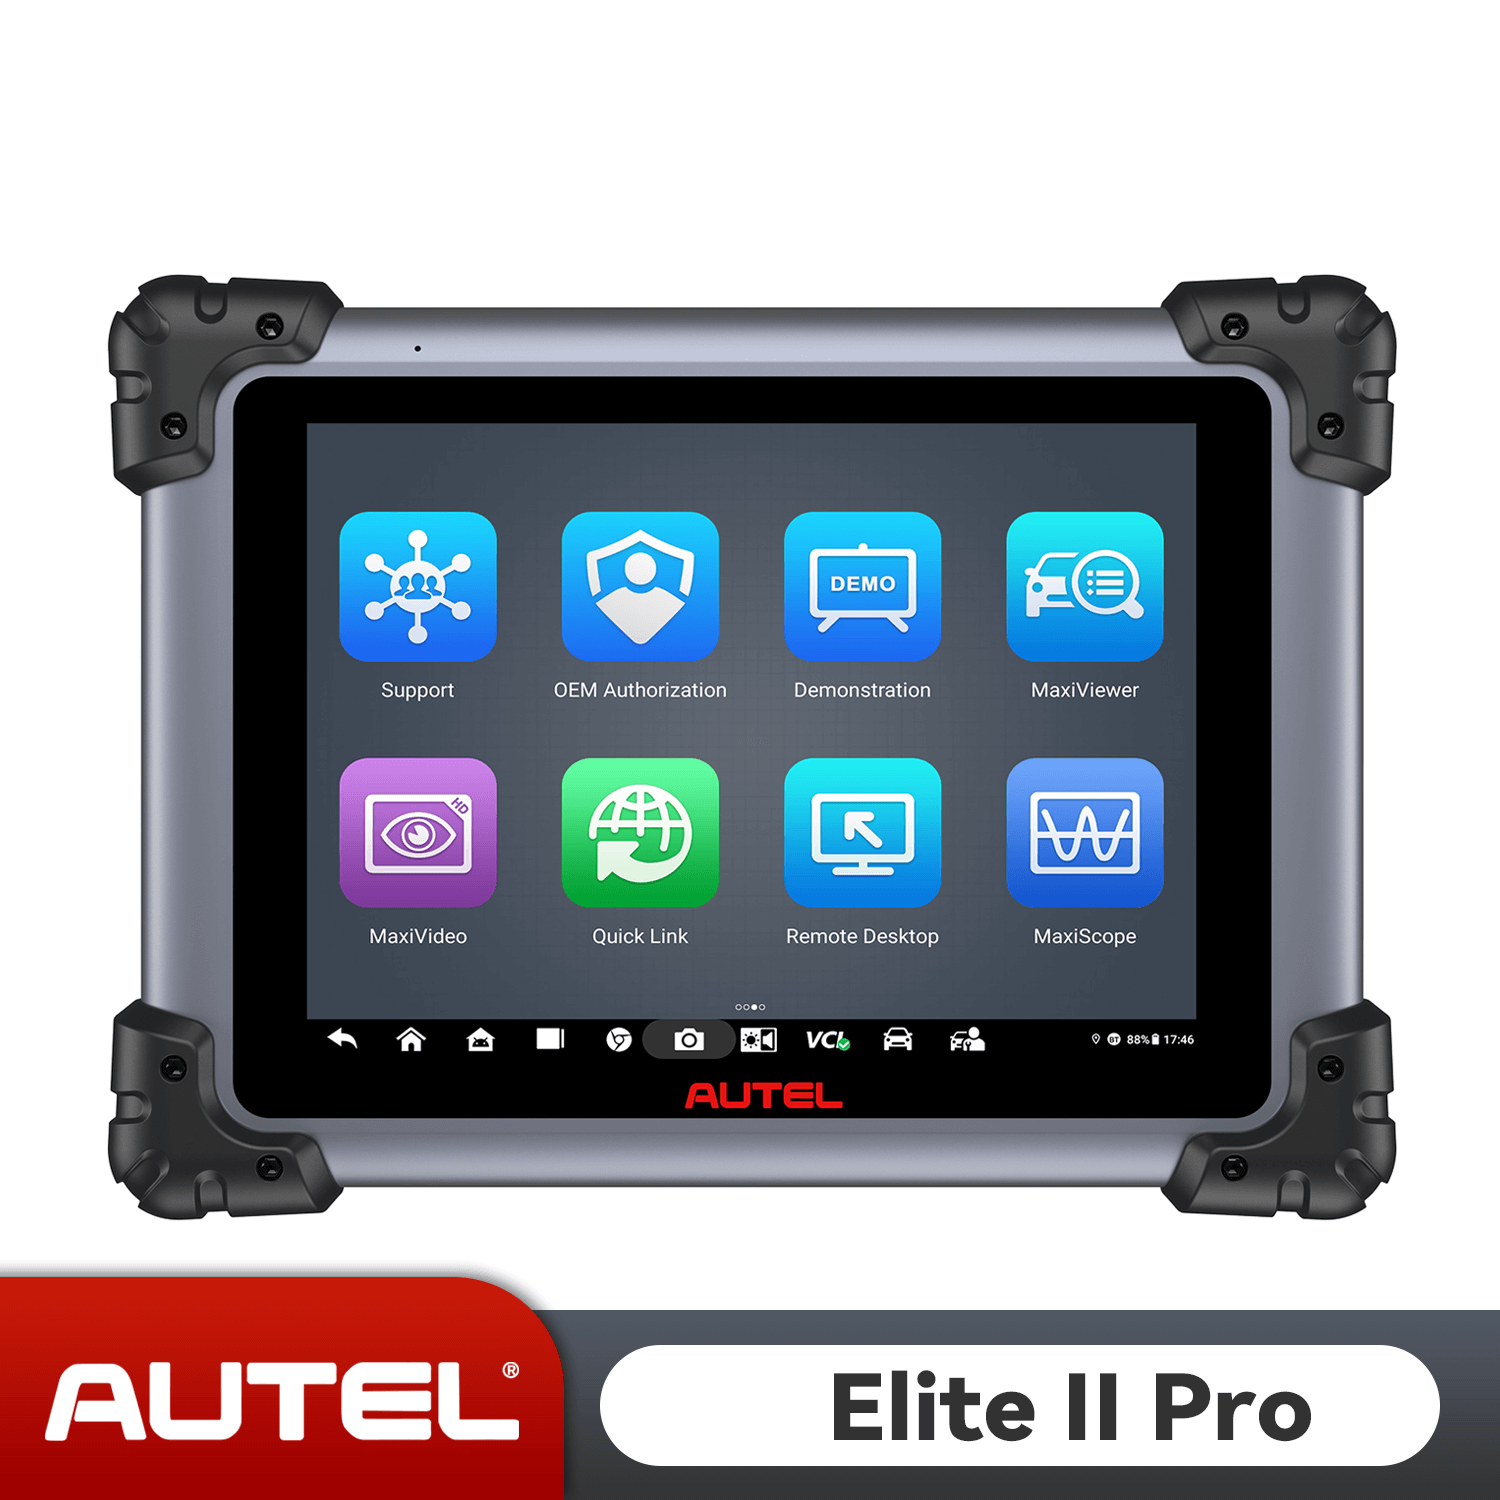 Autel Maxisys Elite II Pro